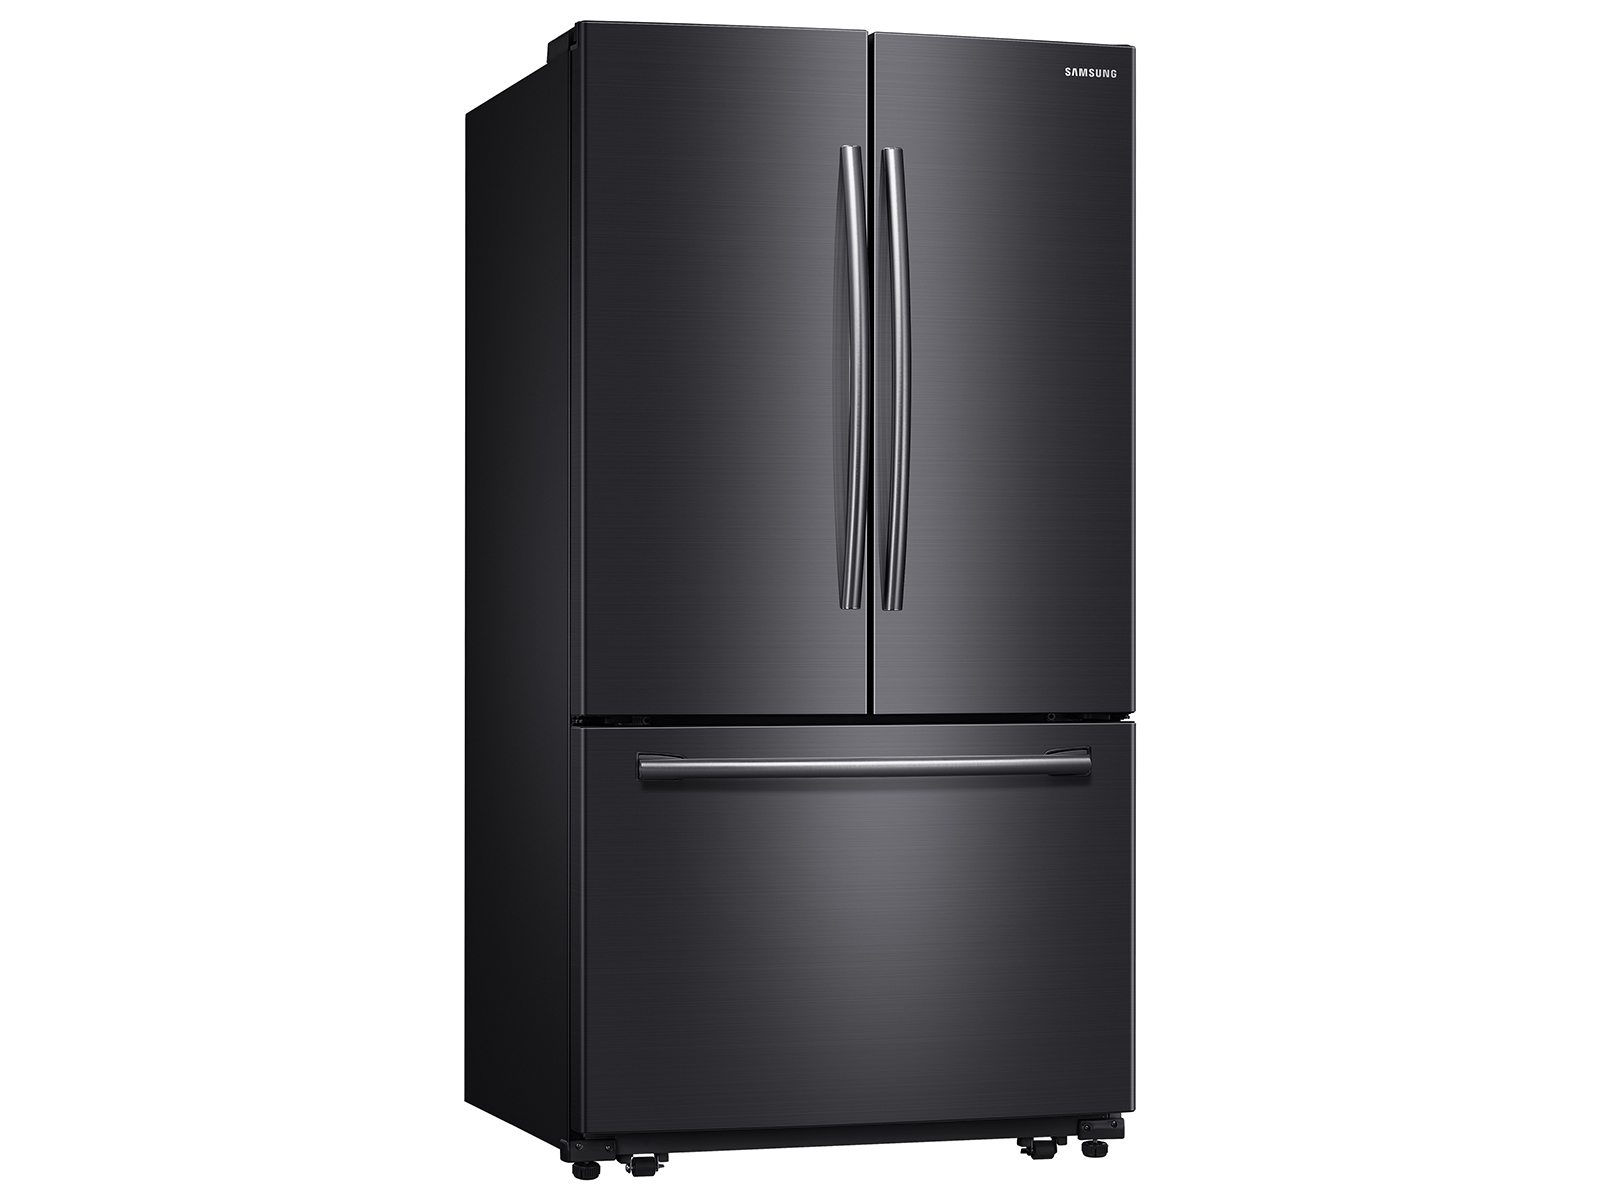 Full size refrigerator - appliances - by owner - sale - craigslist